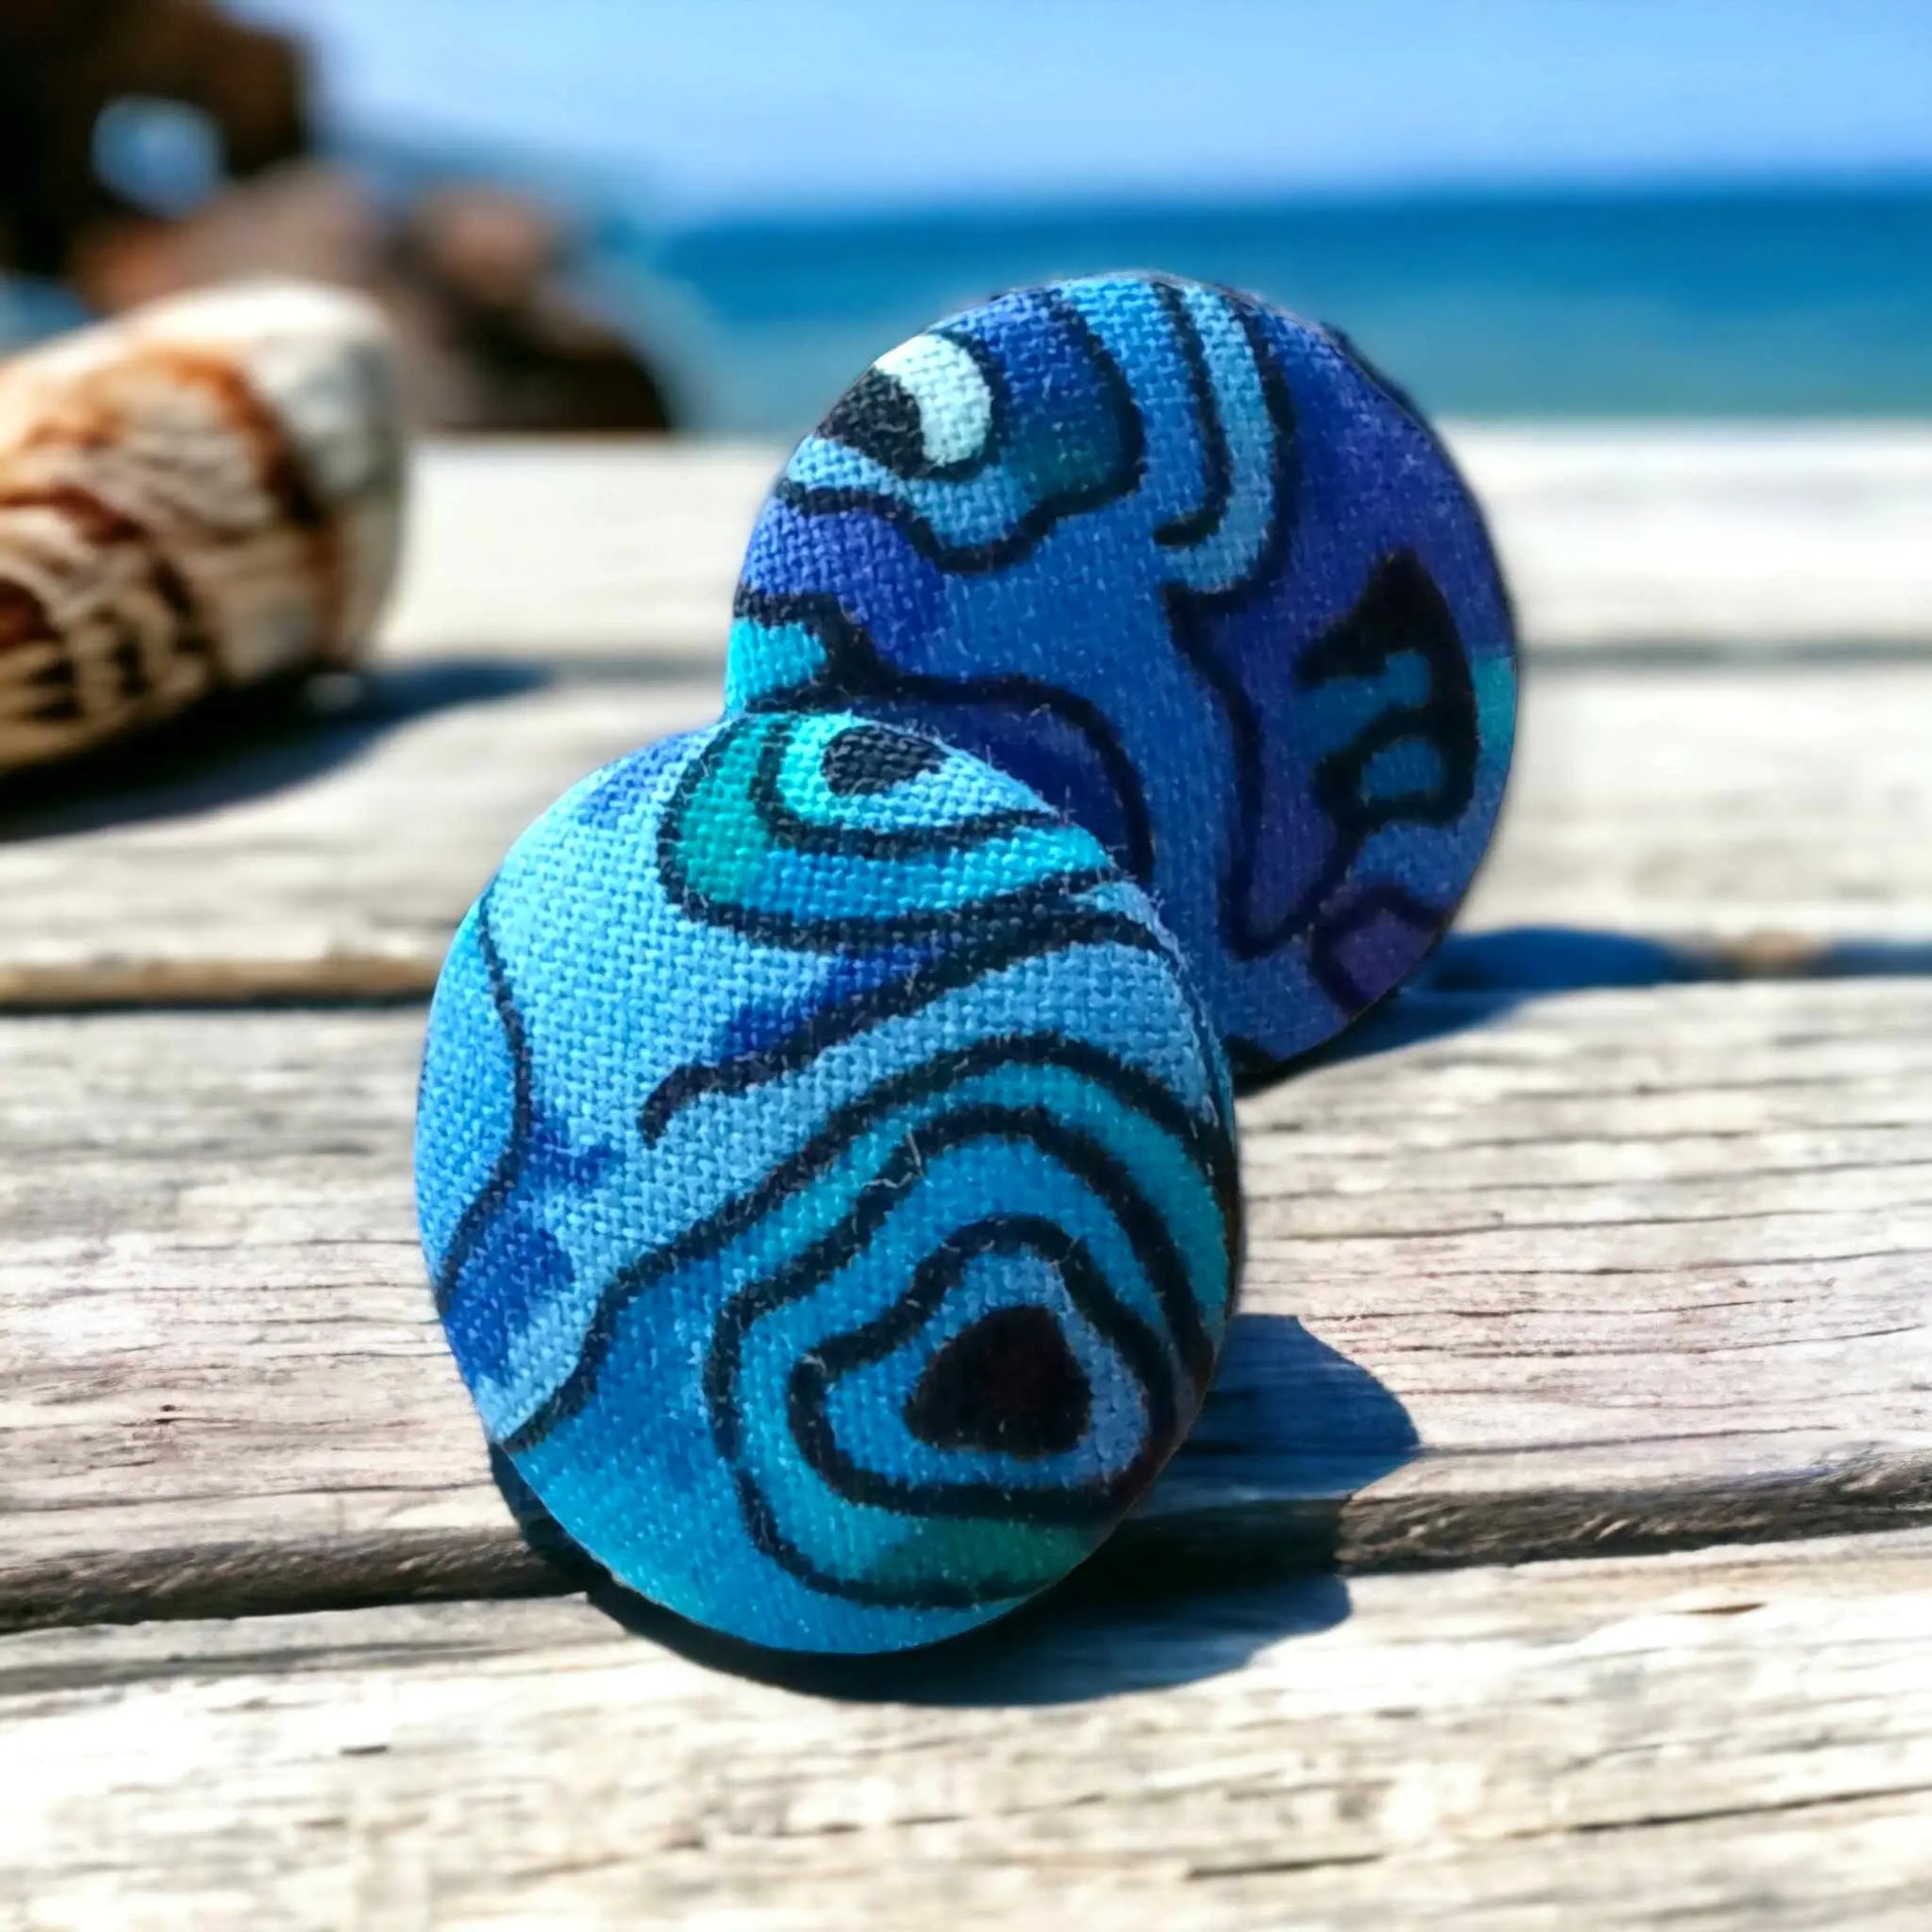 Stunning blue paua shell abalone themed fabric button earrings - Image #1